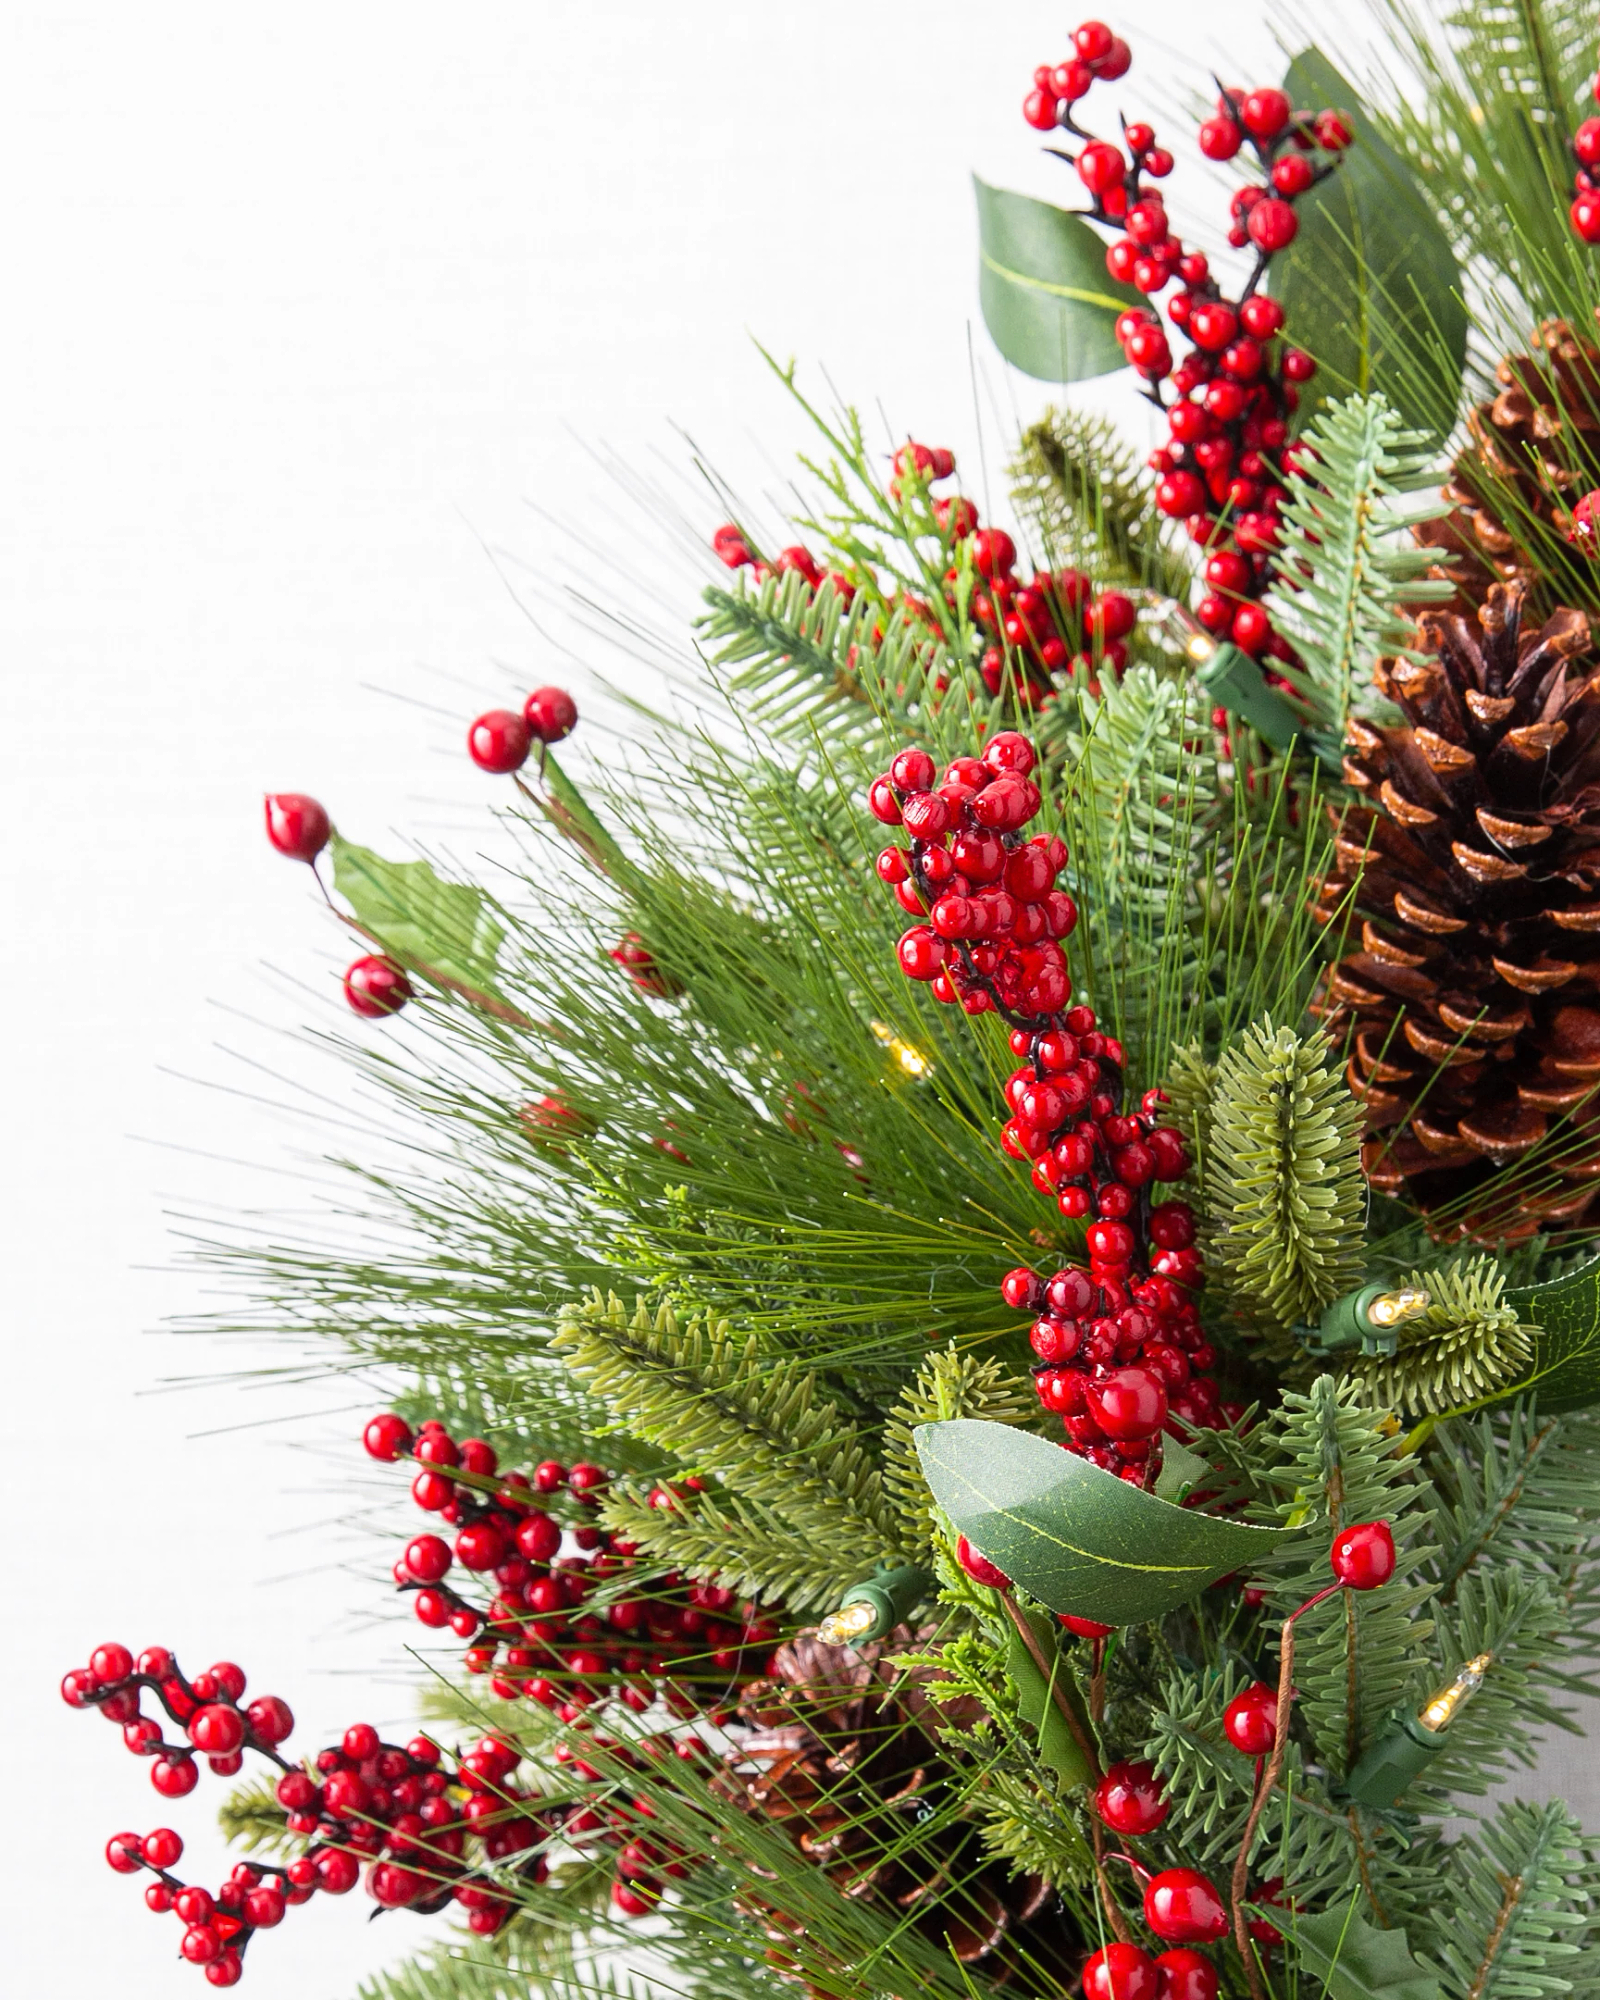 Premium Velvet Wreath Picks with Gift Box, Pine Cones, & Ornament